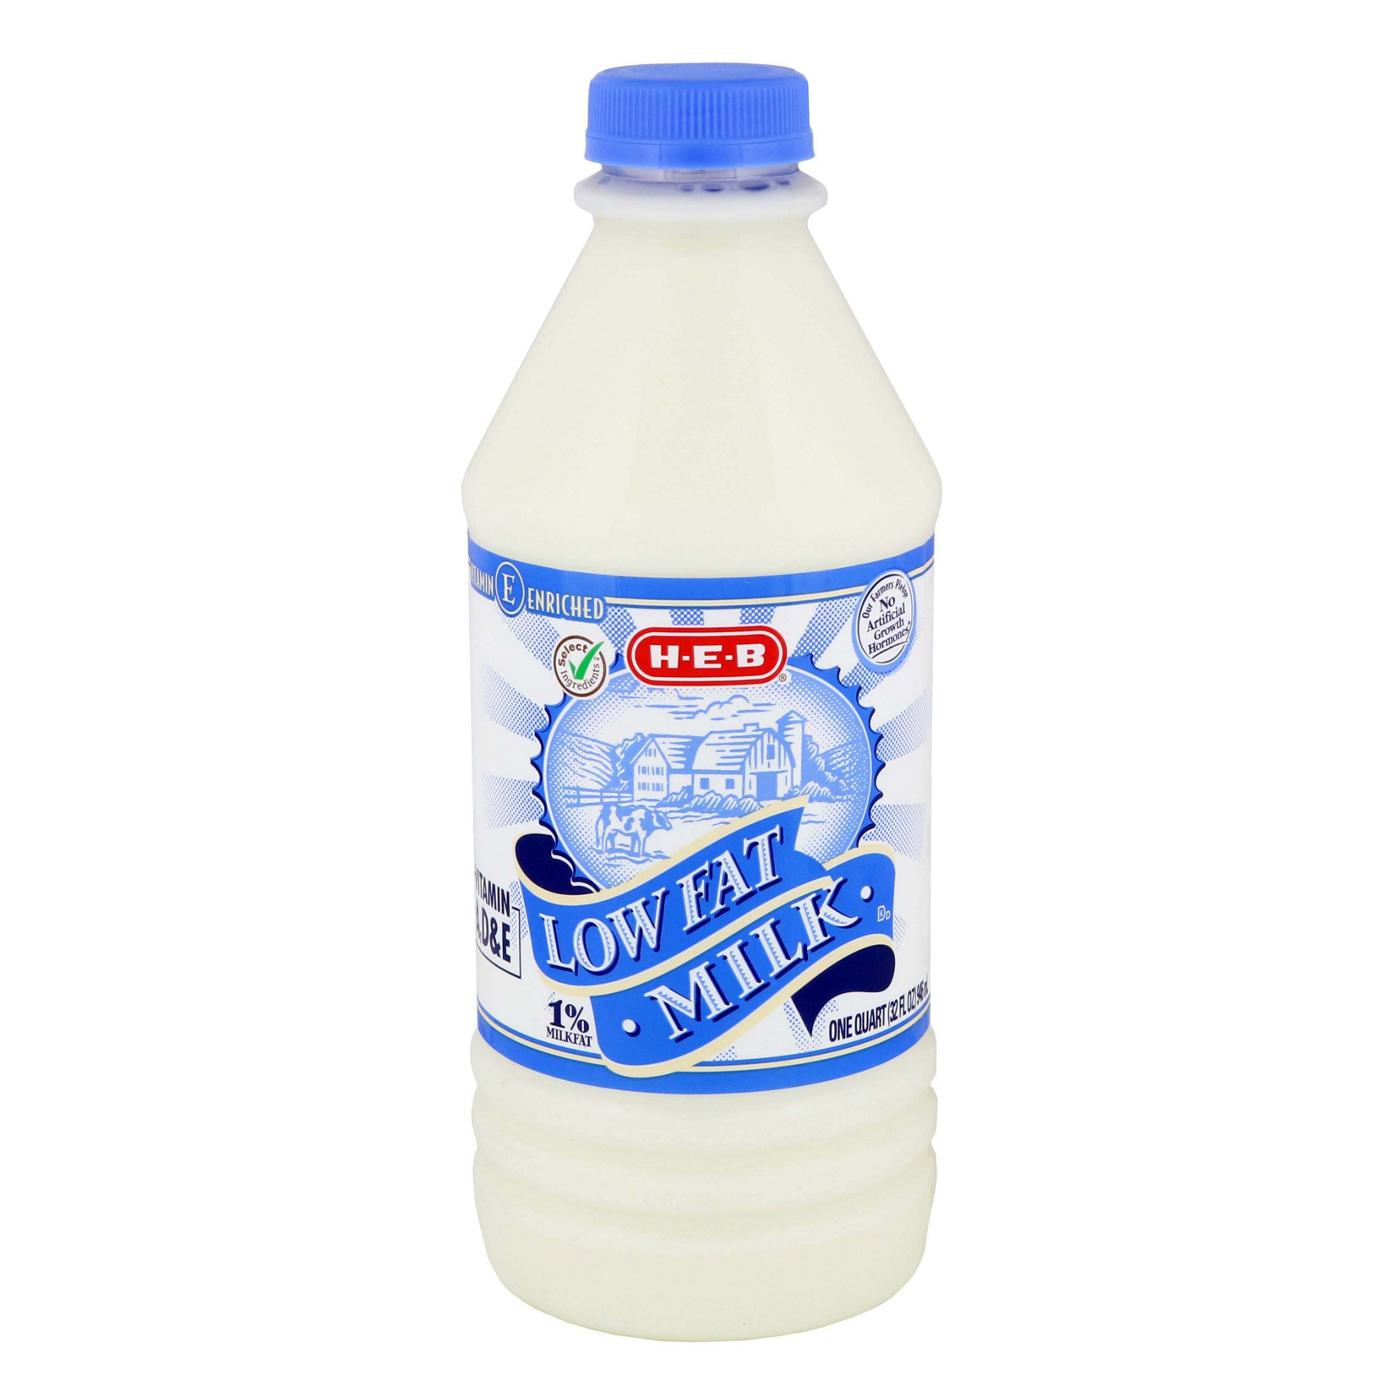 H-E-B 1% Low Fat Milk; image 1 of 2